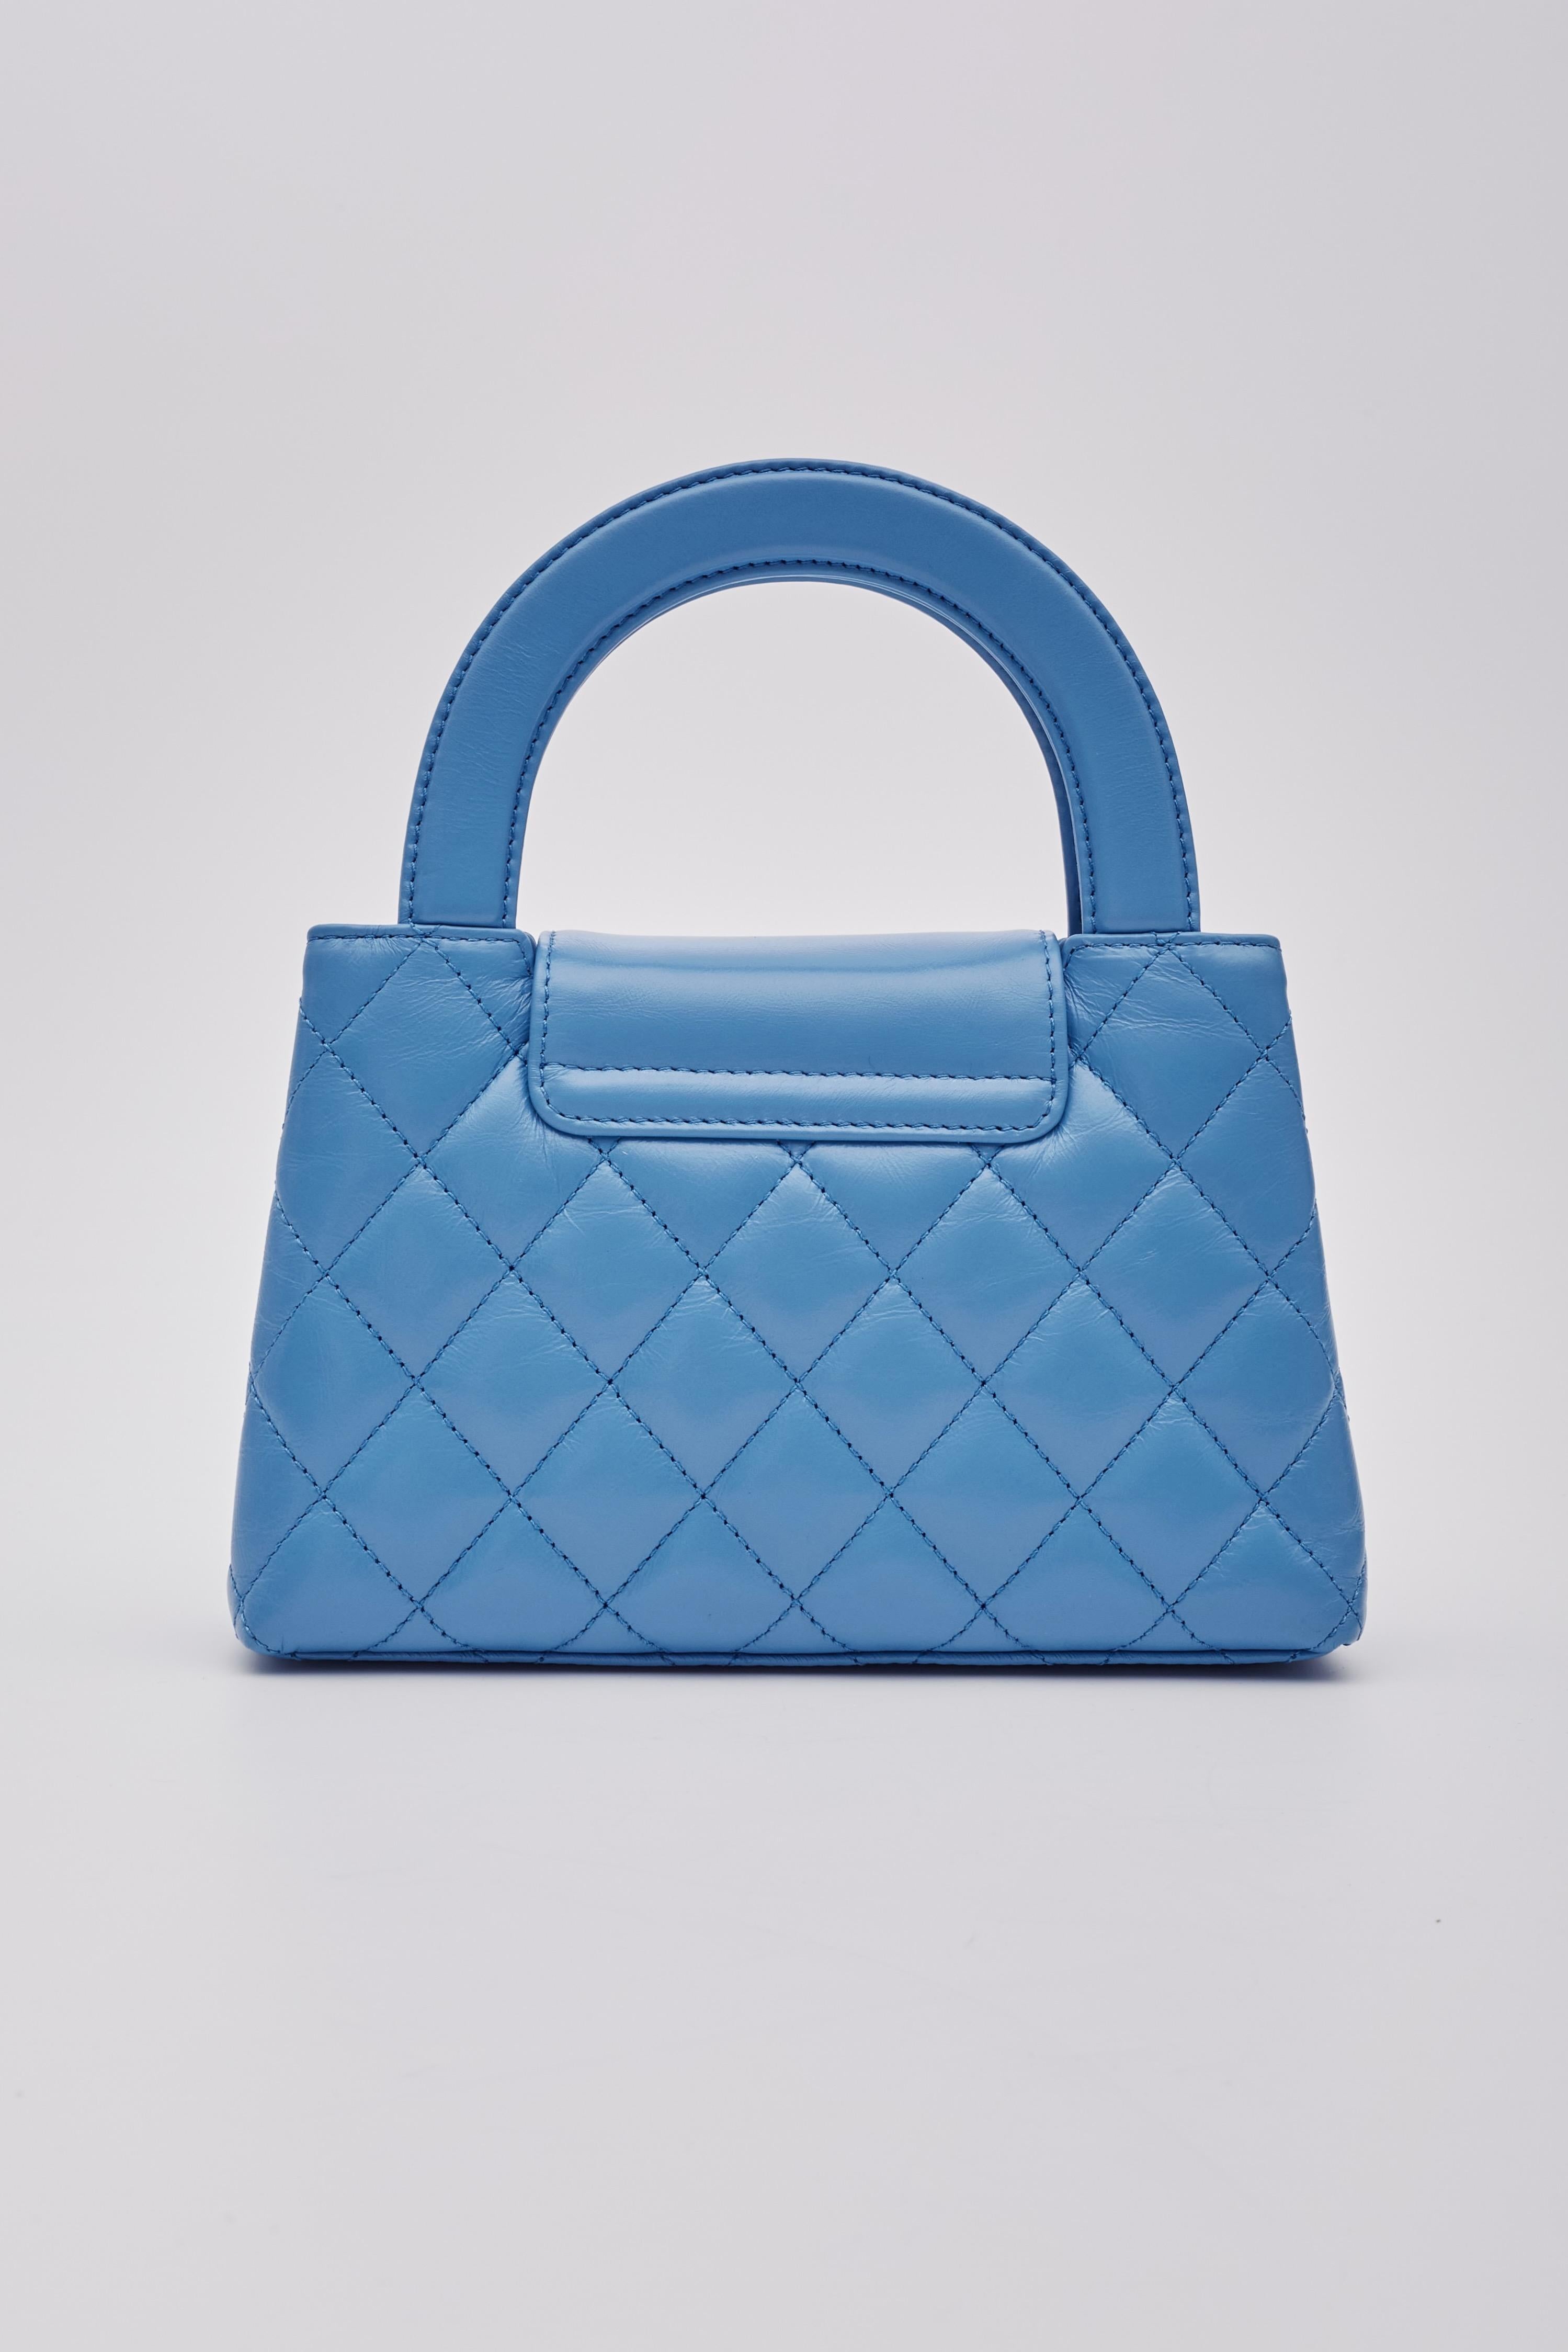 Chanel Blue Calfskin Mini Shopping Kelly Bag For Sale 2